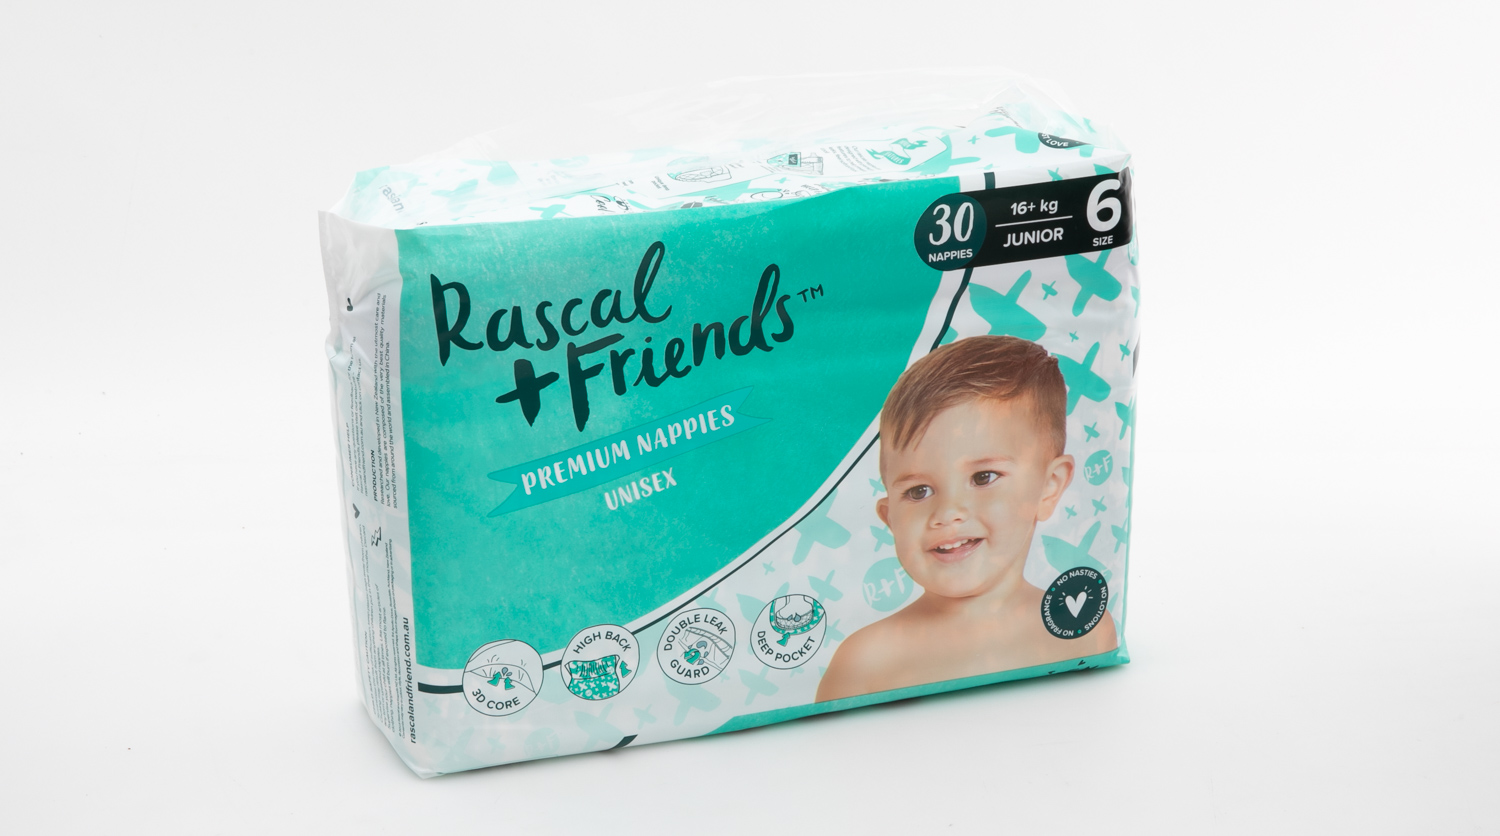 Rascal + Friends Premium Nappies Unisex Junior Size 6 Review, Disposable  nappy